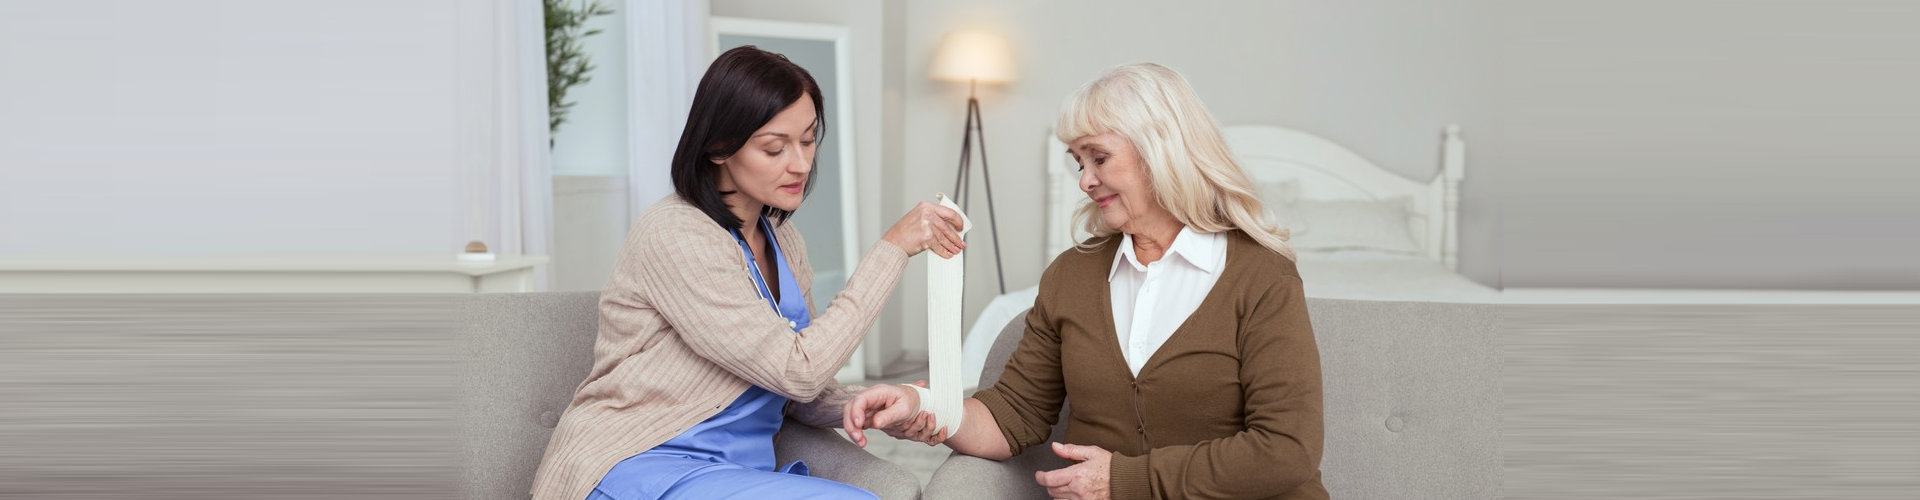 nurse applying a bandage to arm senior woman